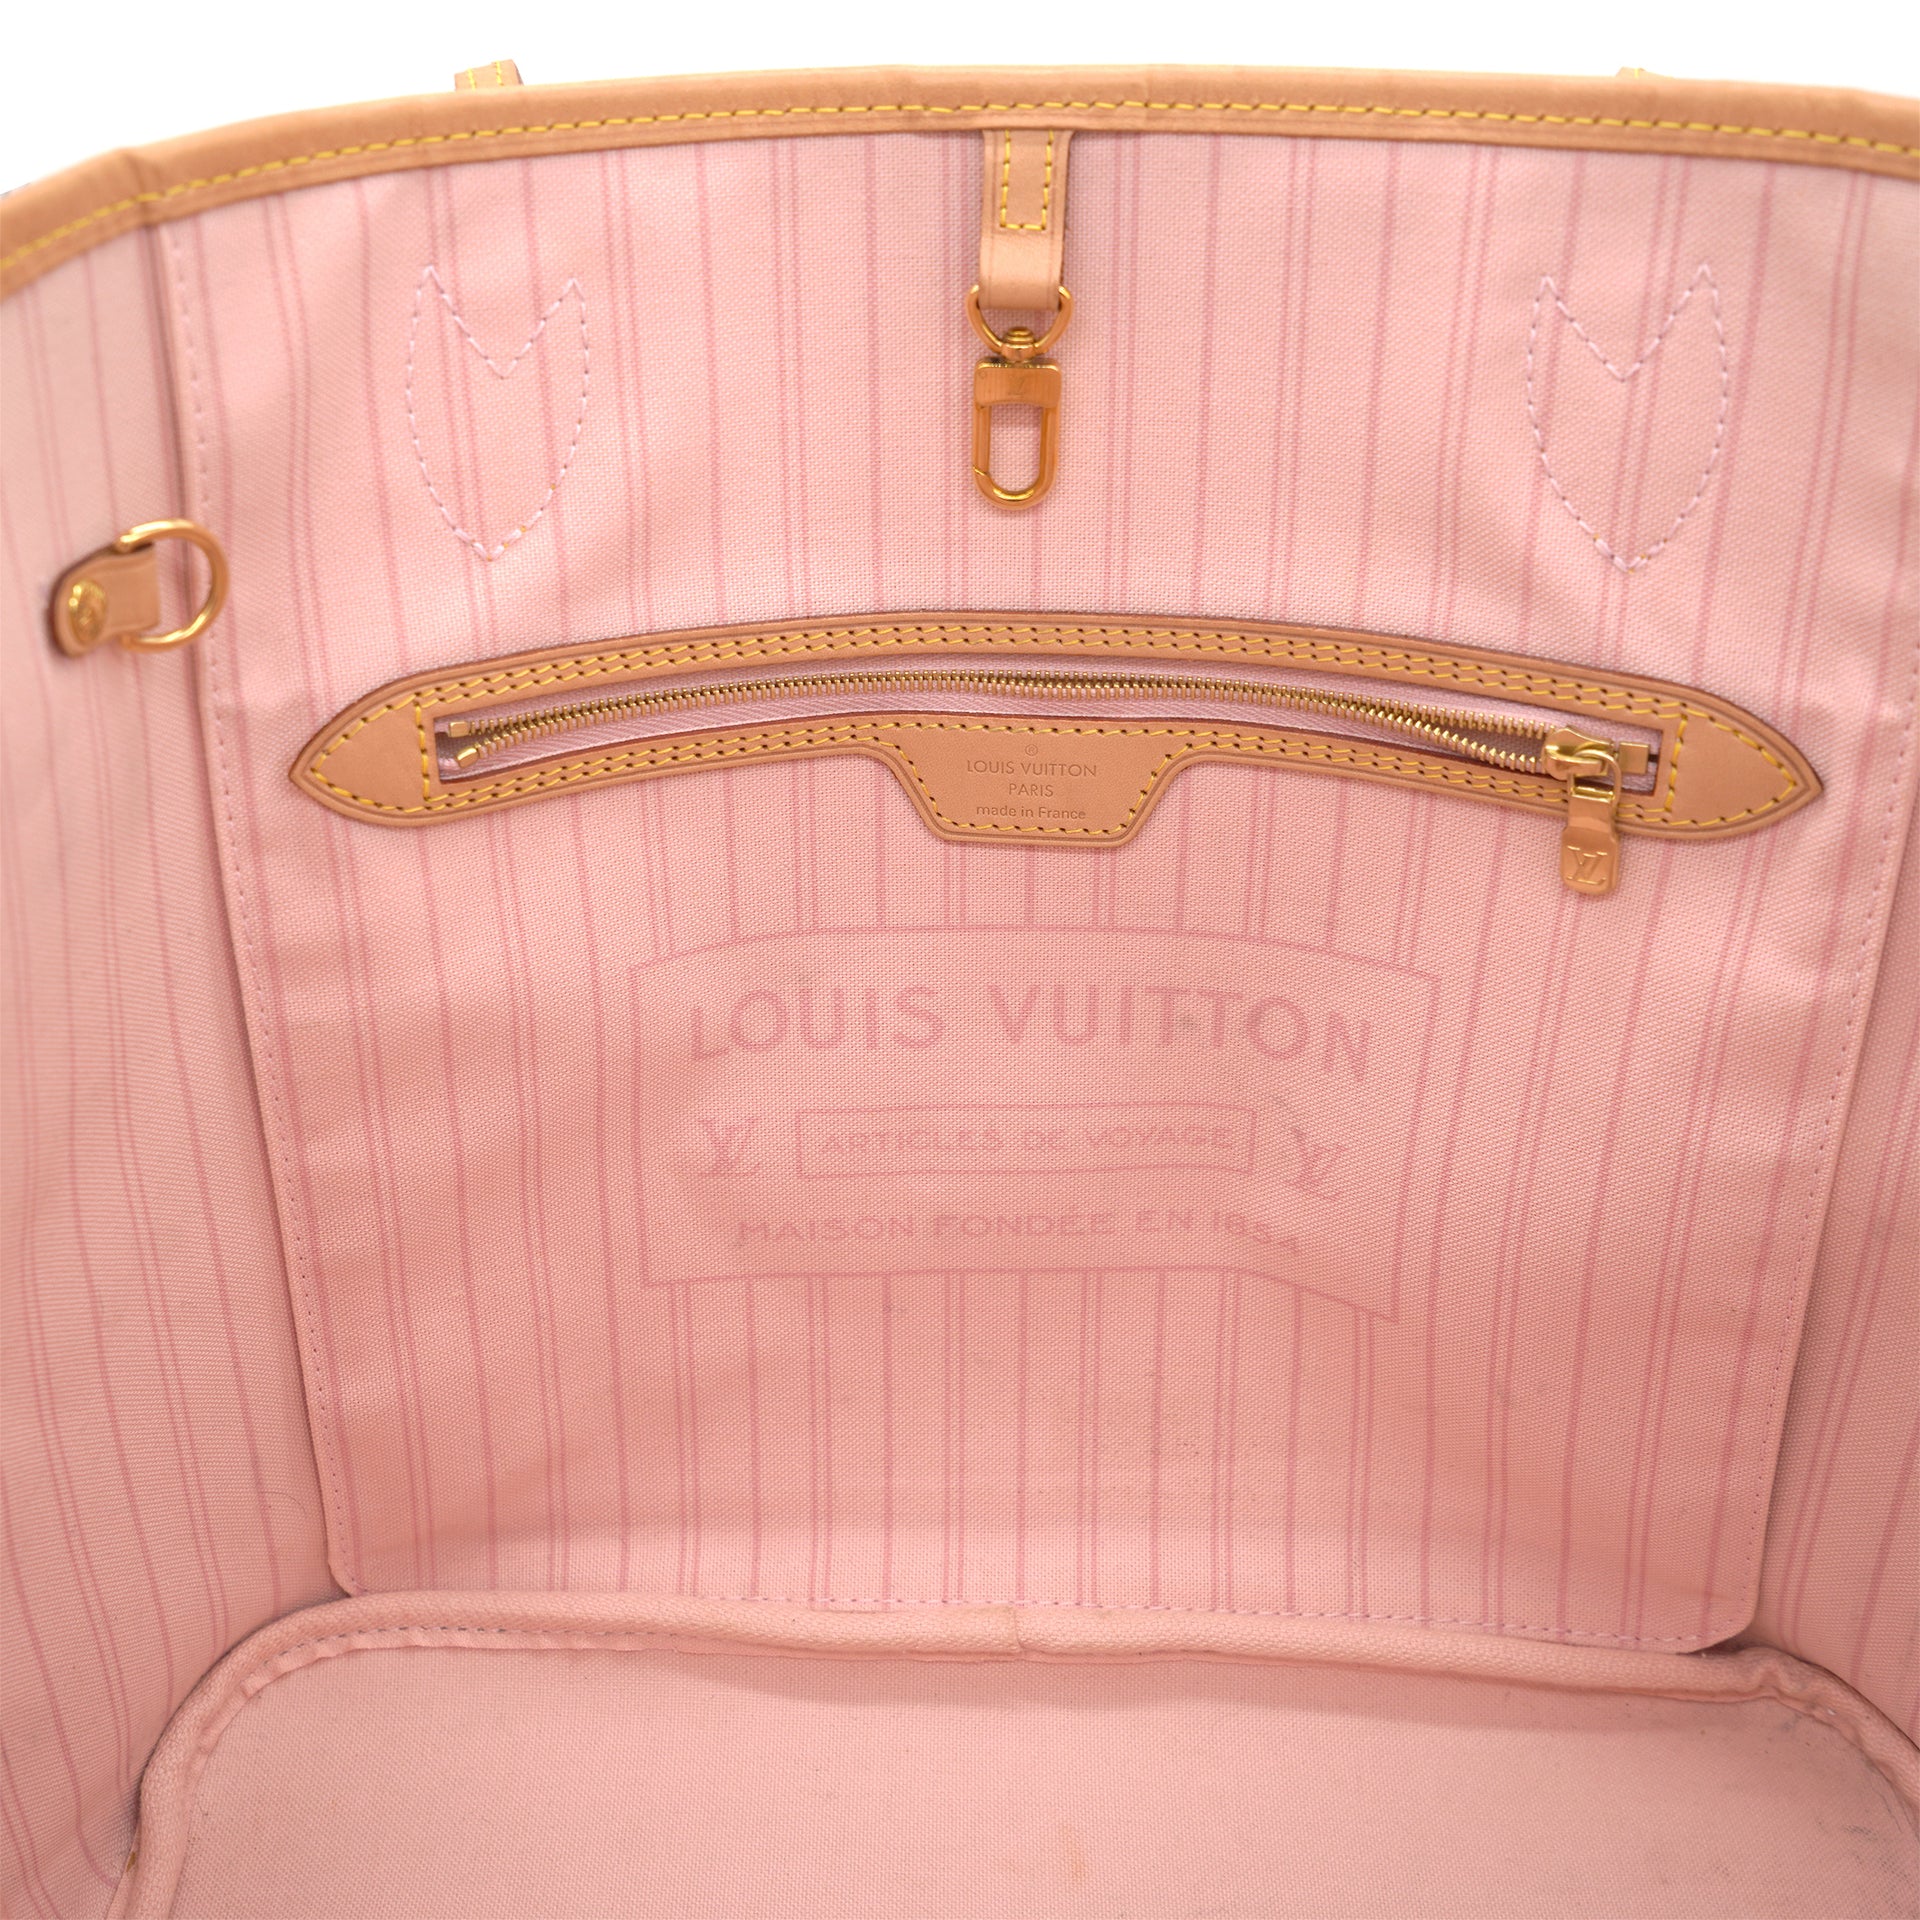 Louis Vuitton Damier Azur Neverfull MM Pink White Blue